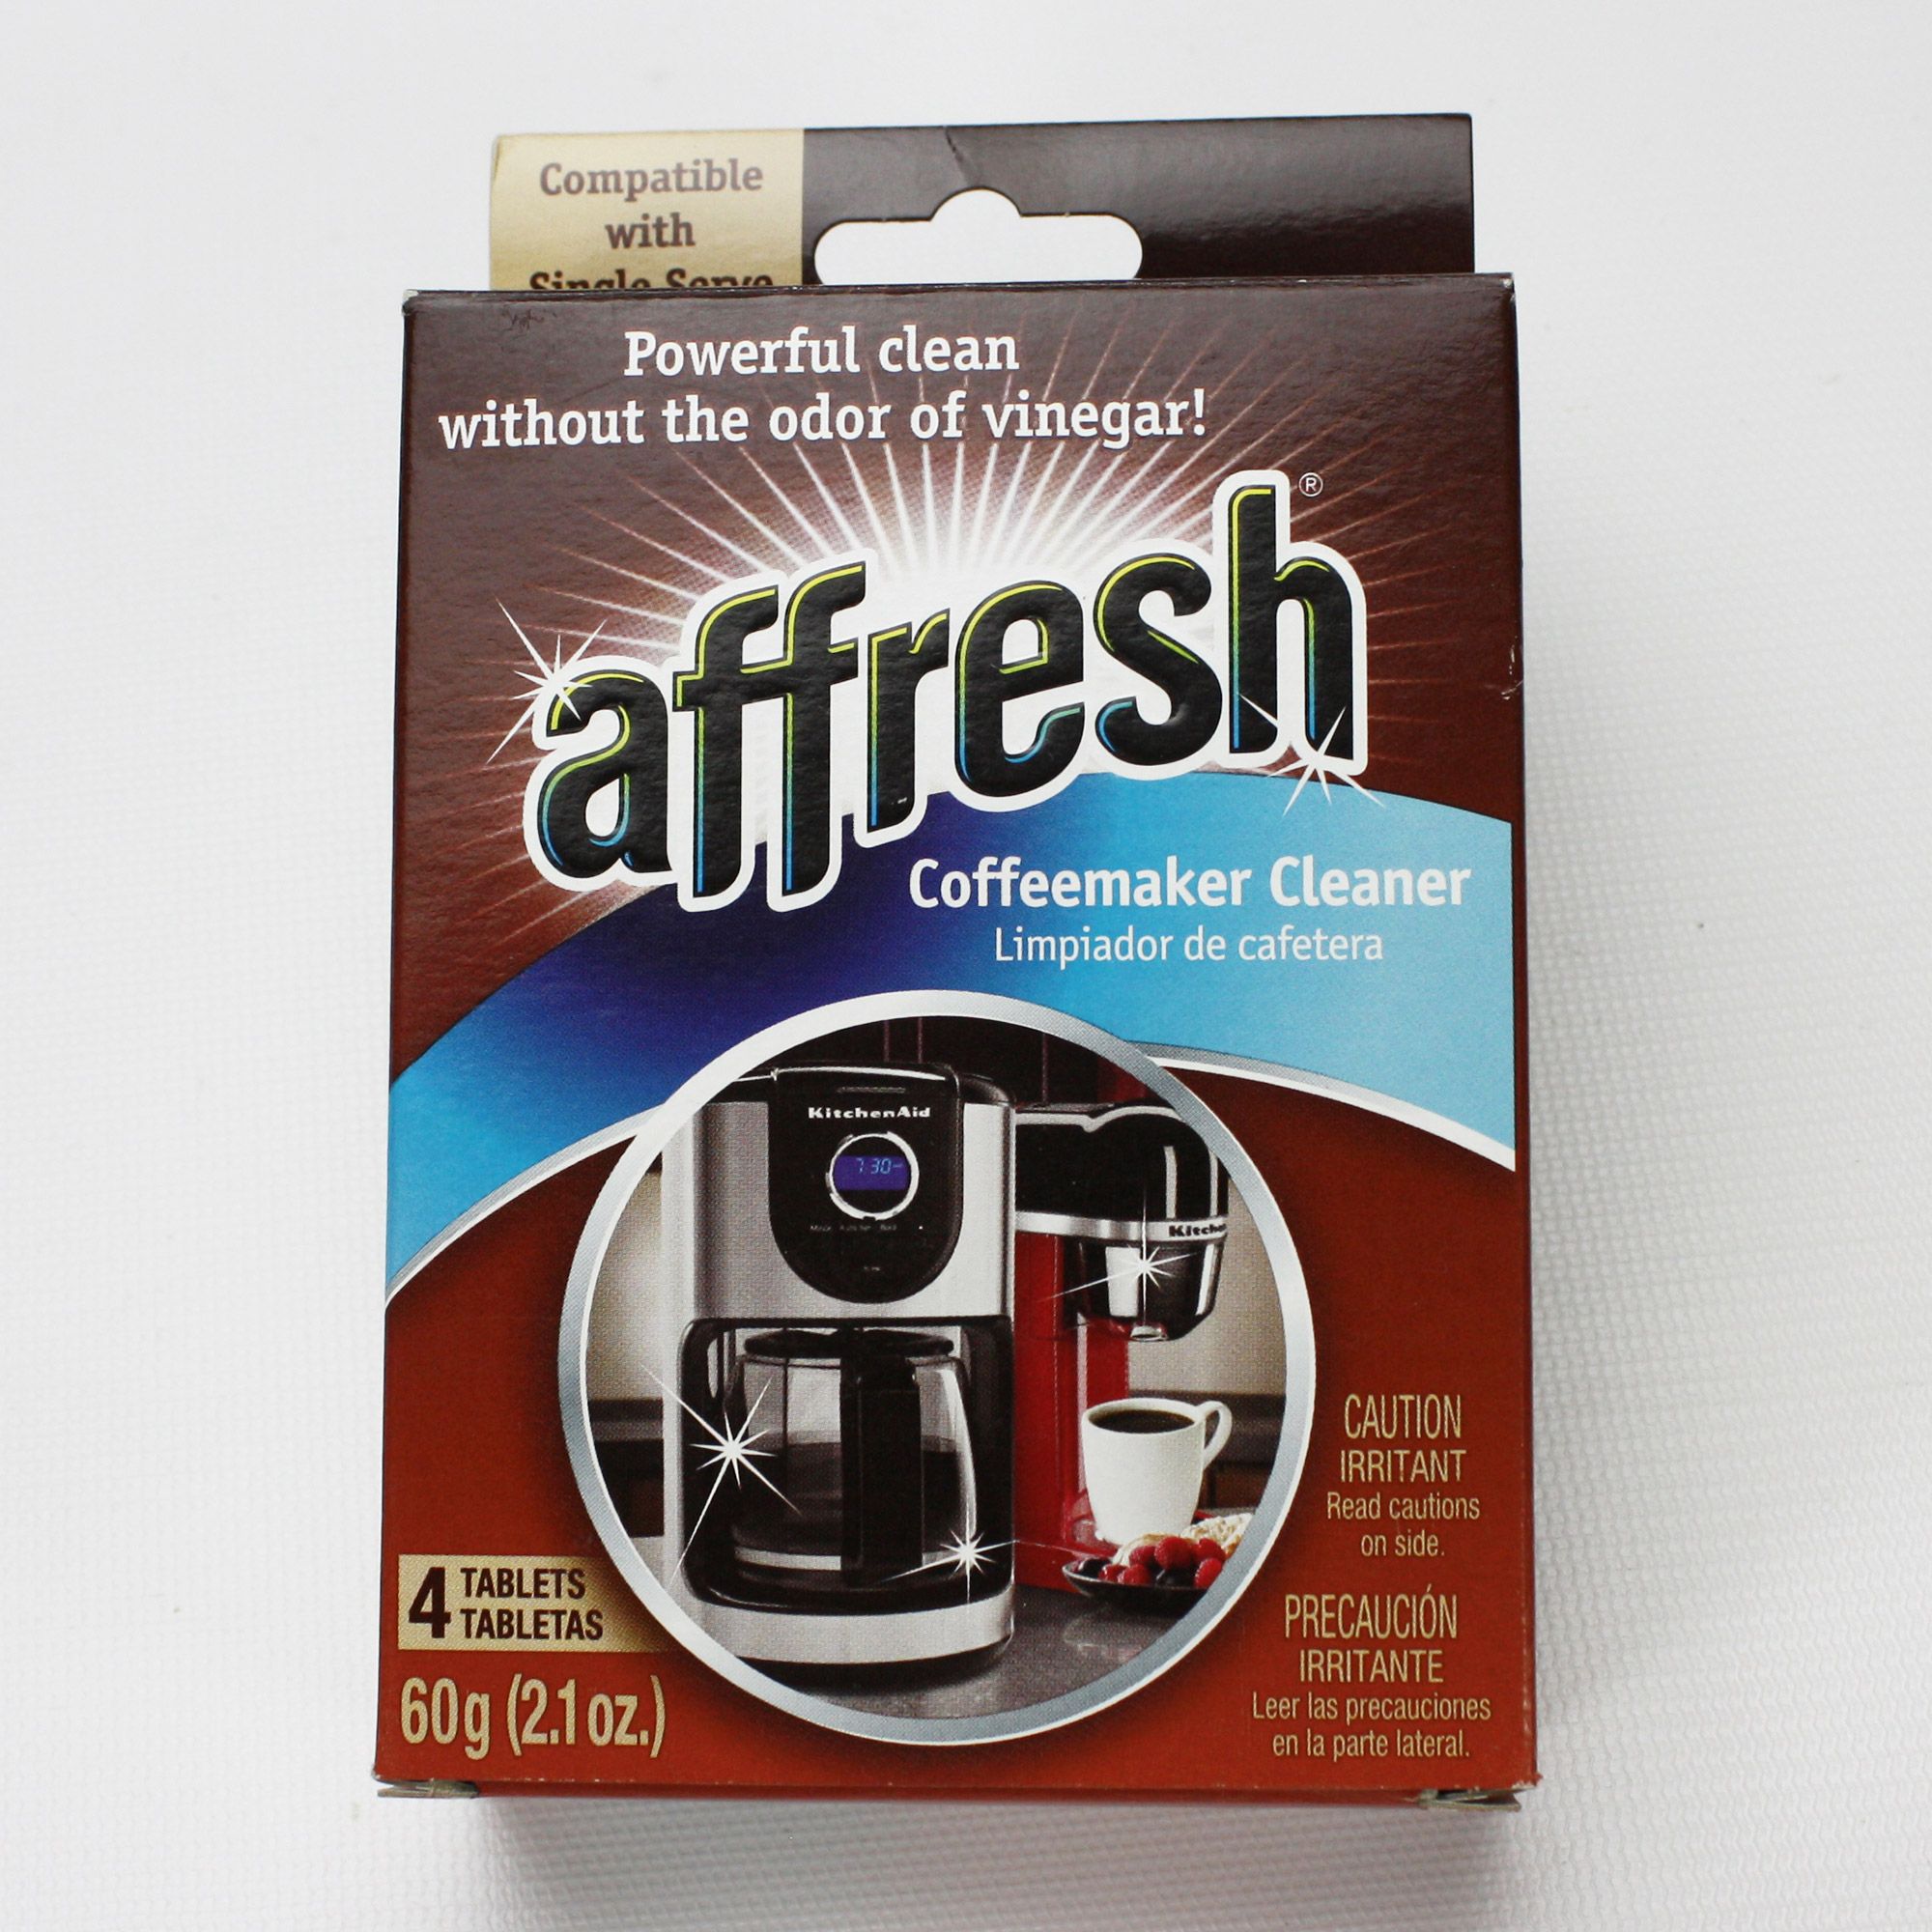 Whirlpool Affresh Coffeemaker Cleaner Tablets